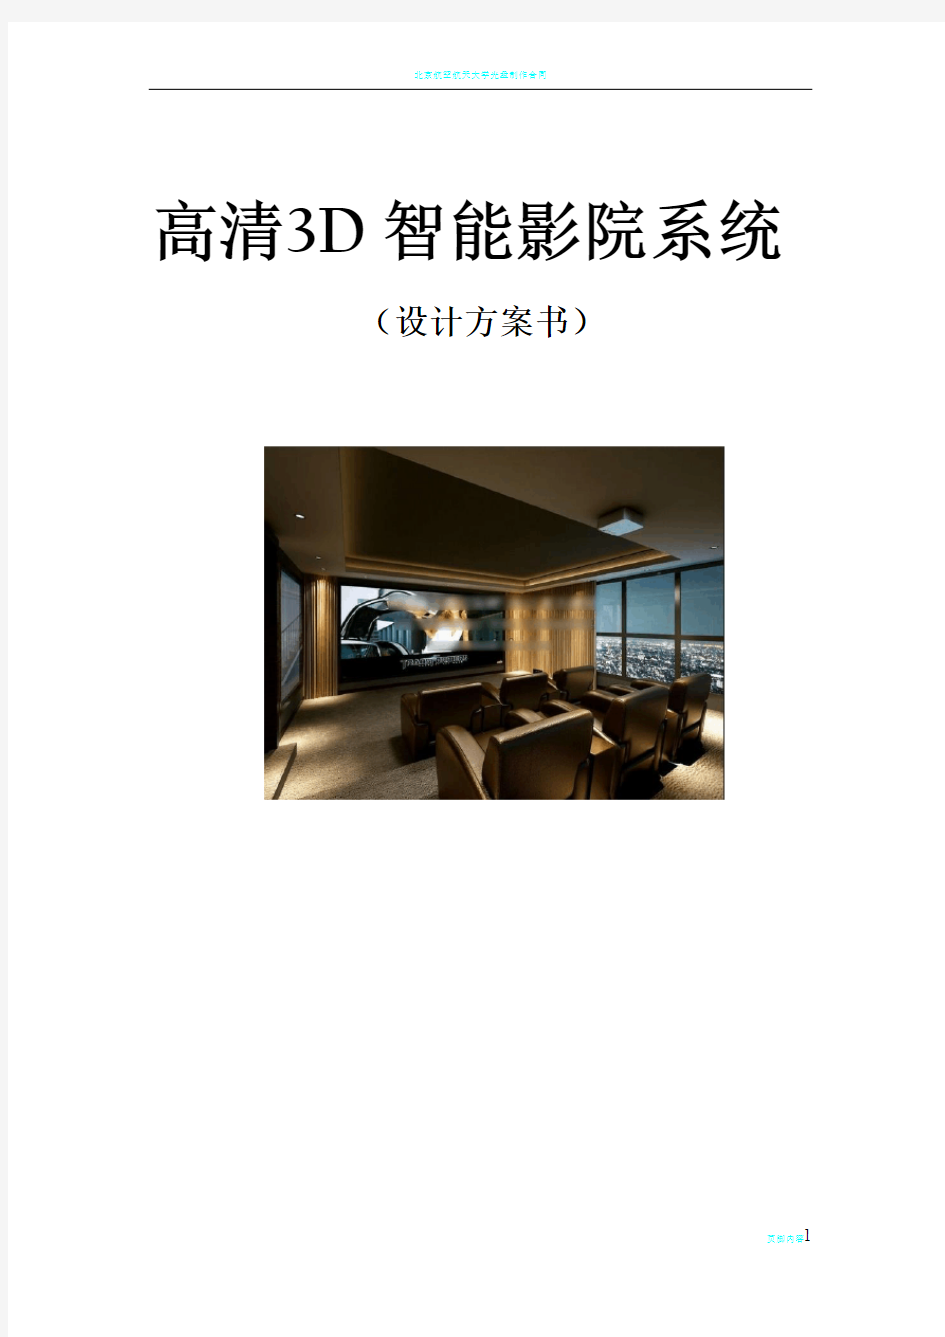 3D高清影院设计方案